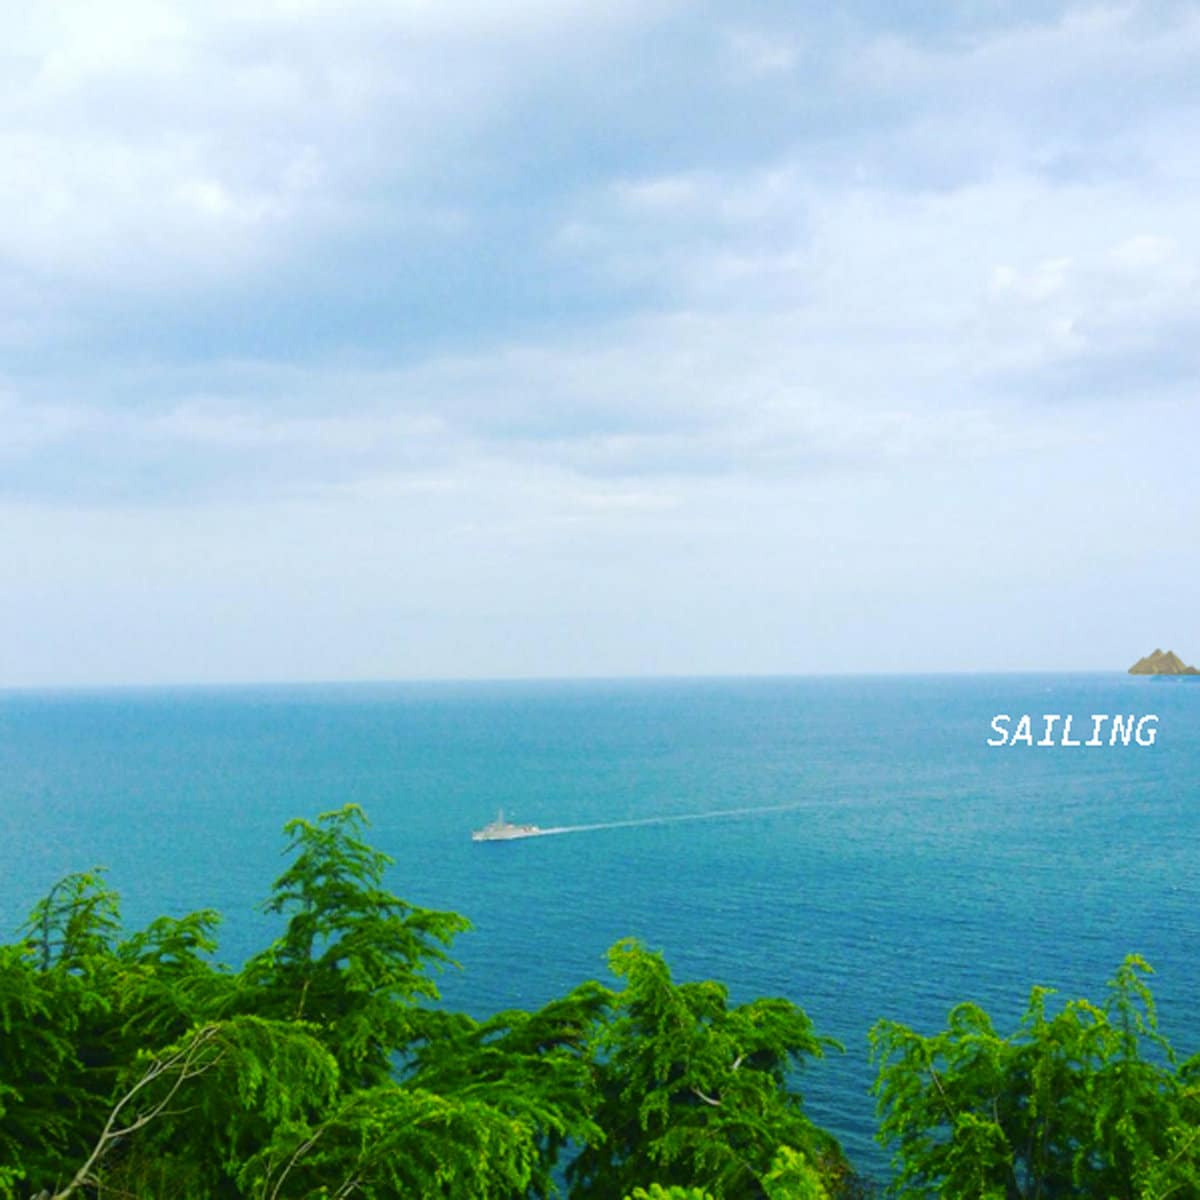 Tajima Hal - "Sailing LP" (Release)